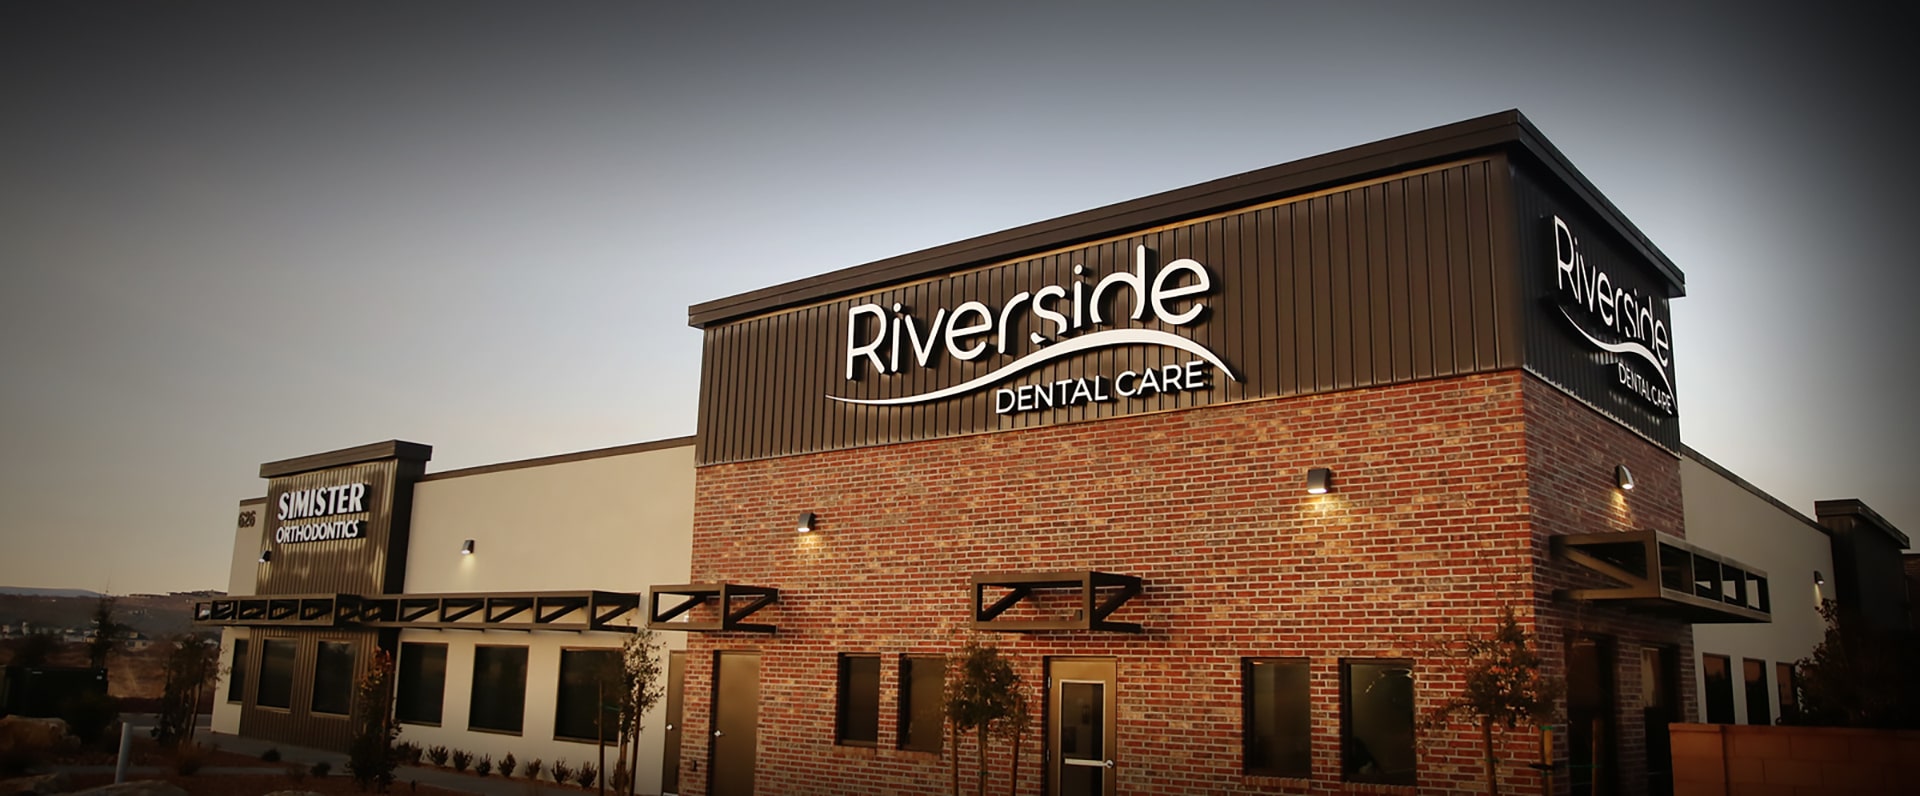 Riverside-Dental-Care-Washington-Utah-Location